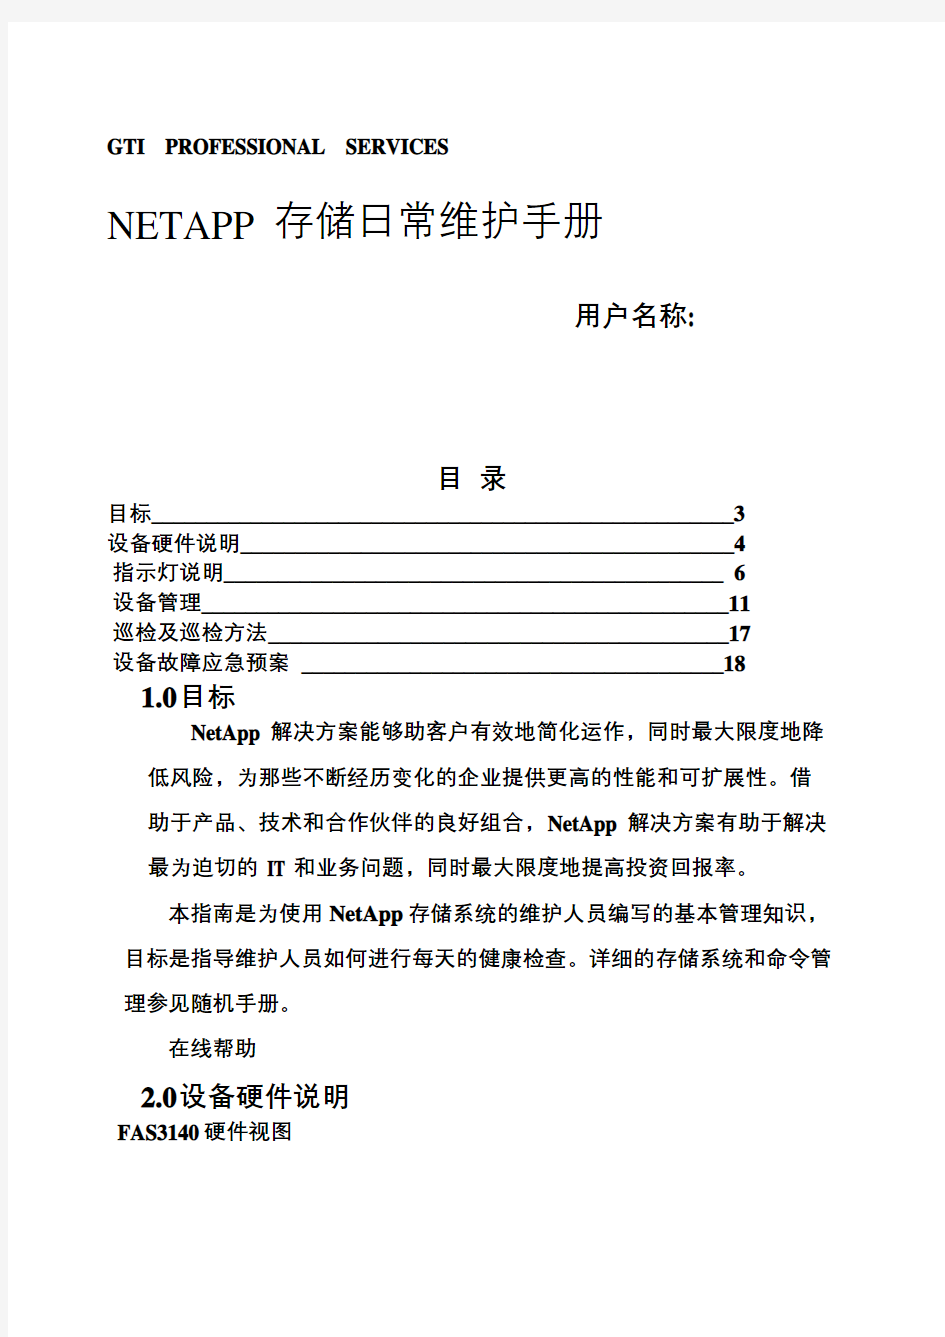 netapp设备用户日常维护手册